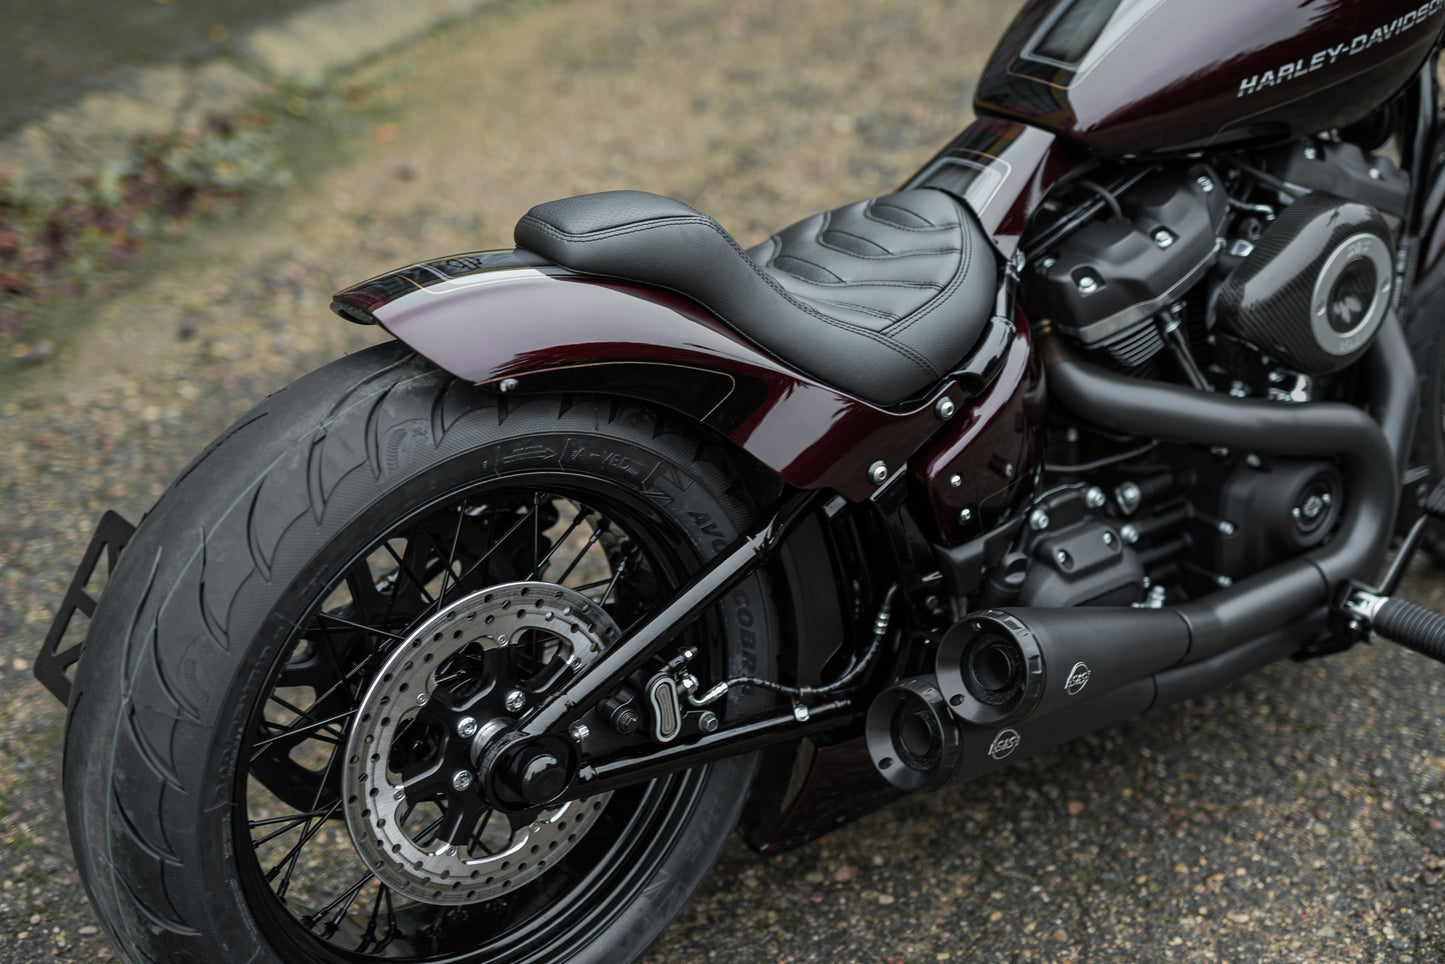 Zoomed Harley Davidson motorcycle with Killer Custom "Bobbstr" rear fender from the rear 